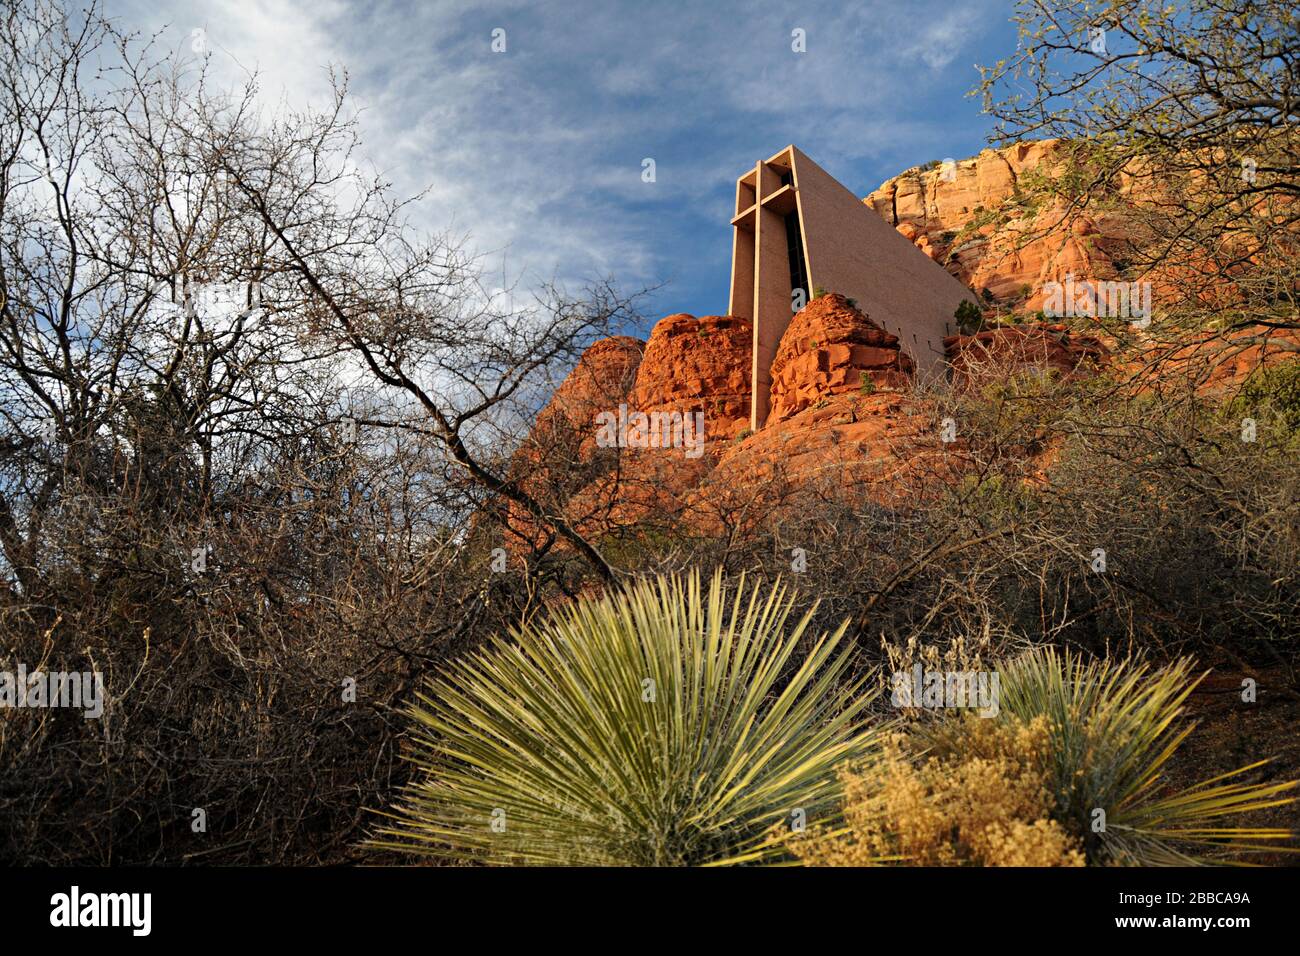 Chapel of the Holy Cross, Sedona, Arizona, USA Banque D'Images